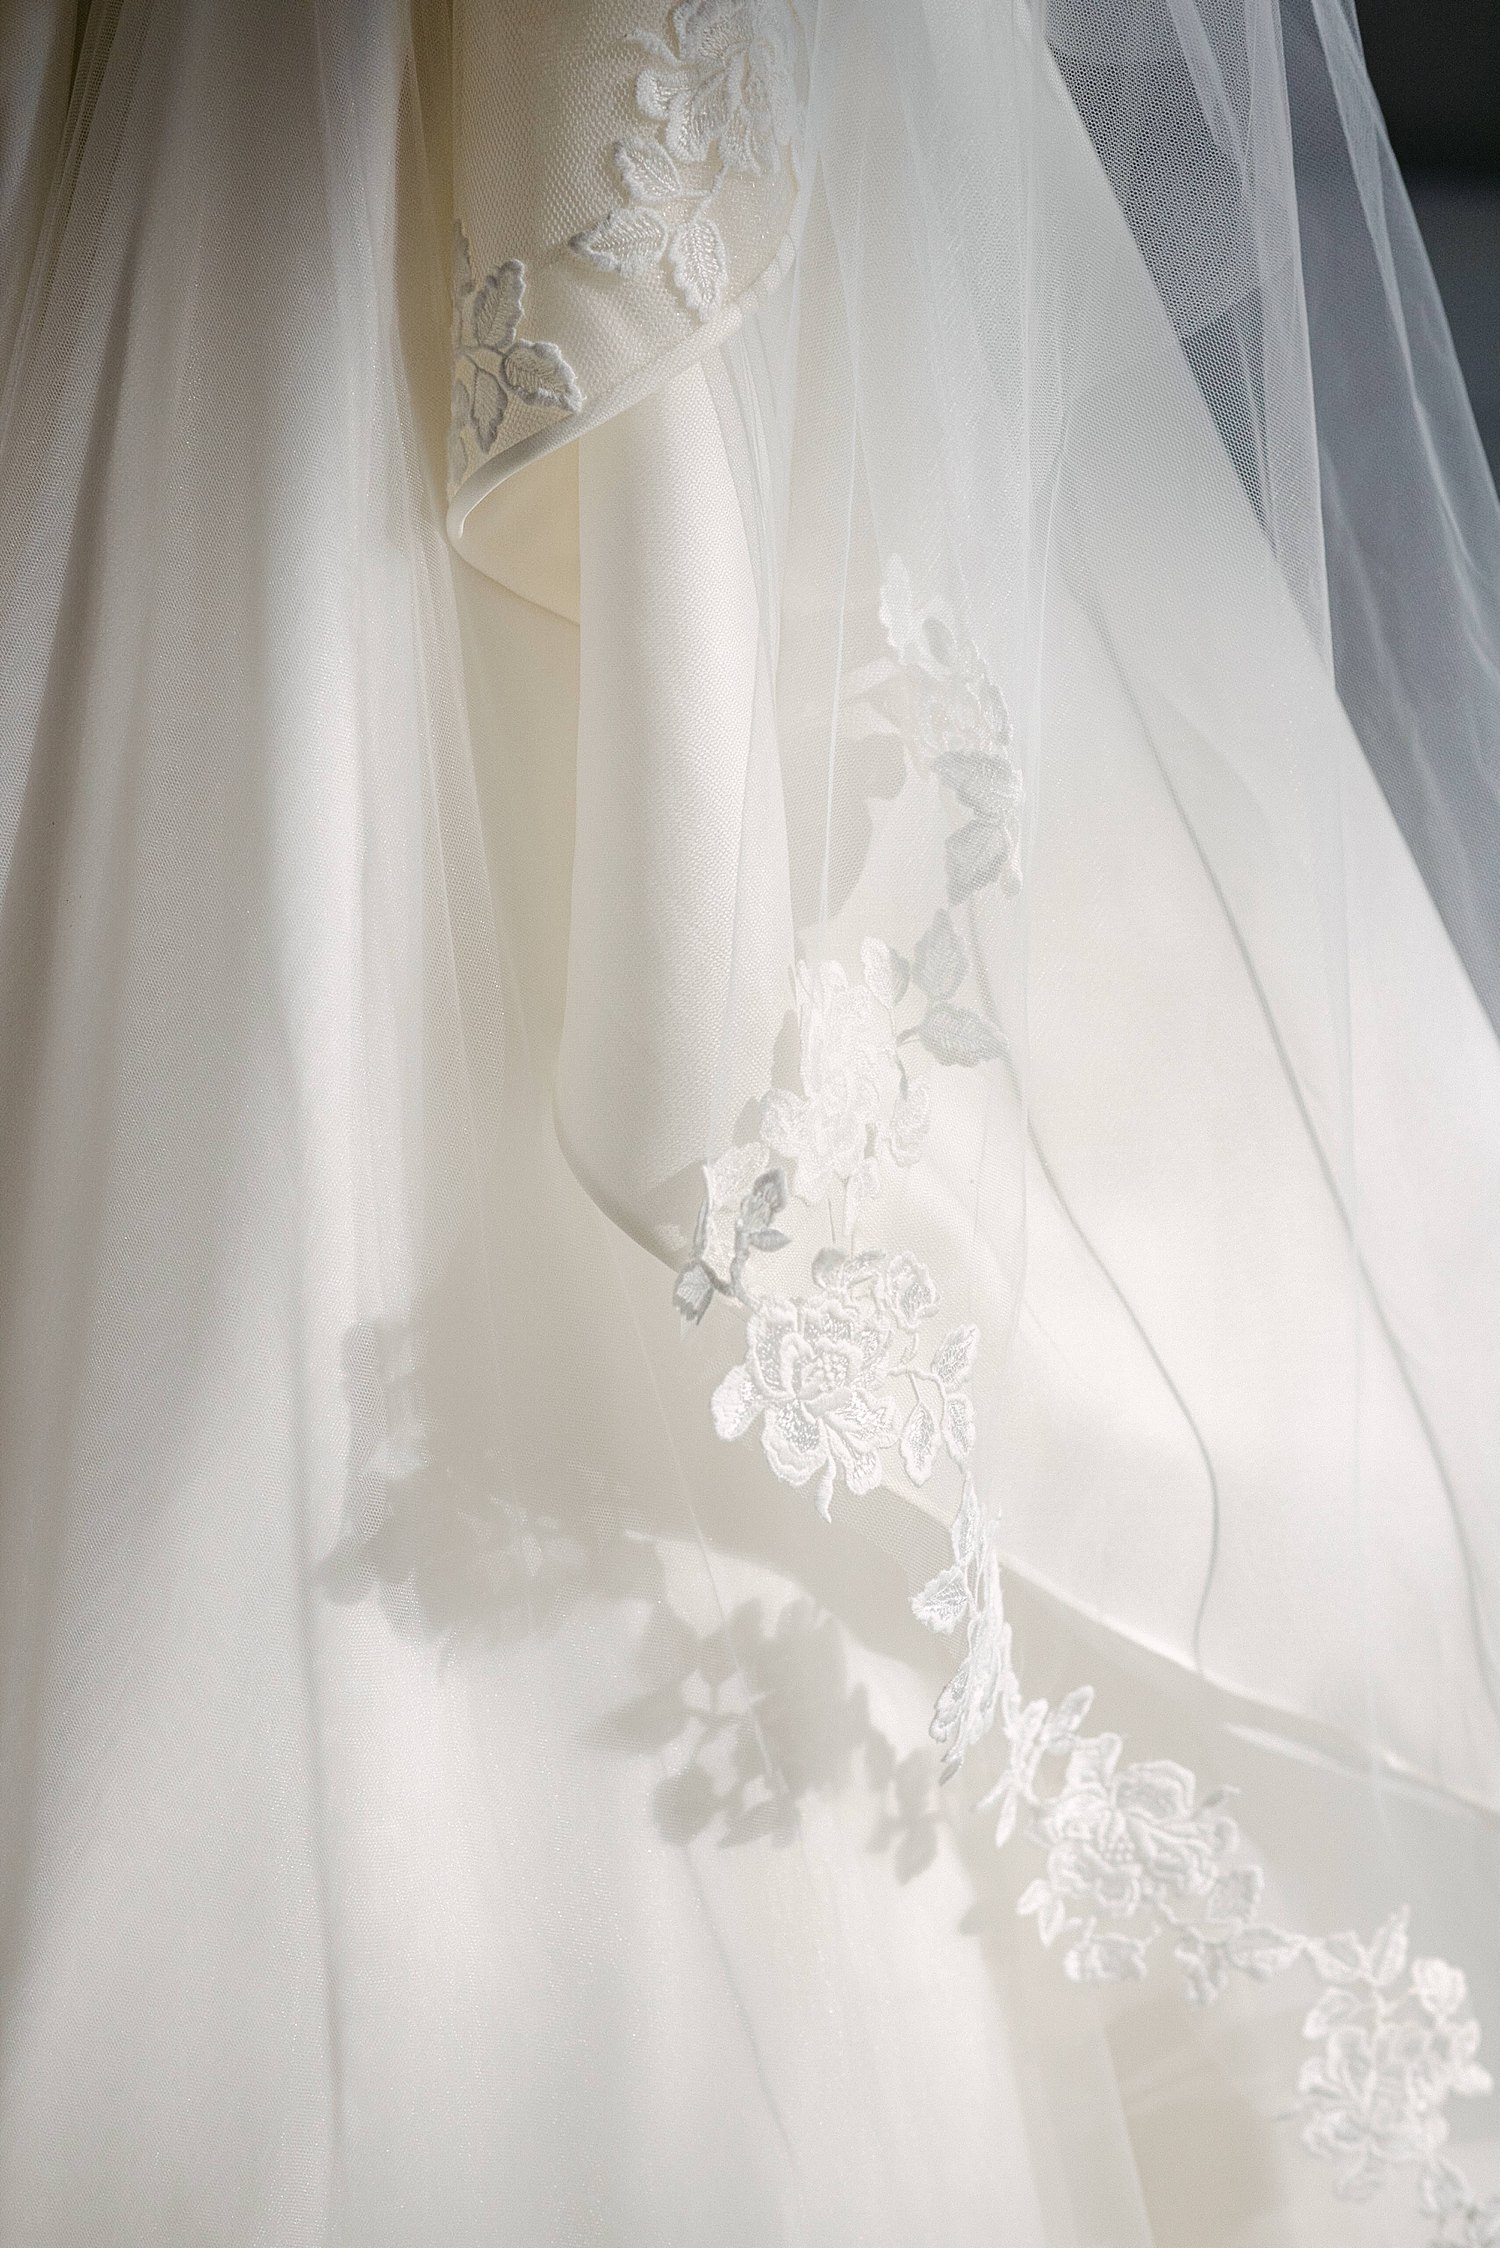 white wedding dress and veil shadows